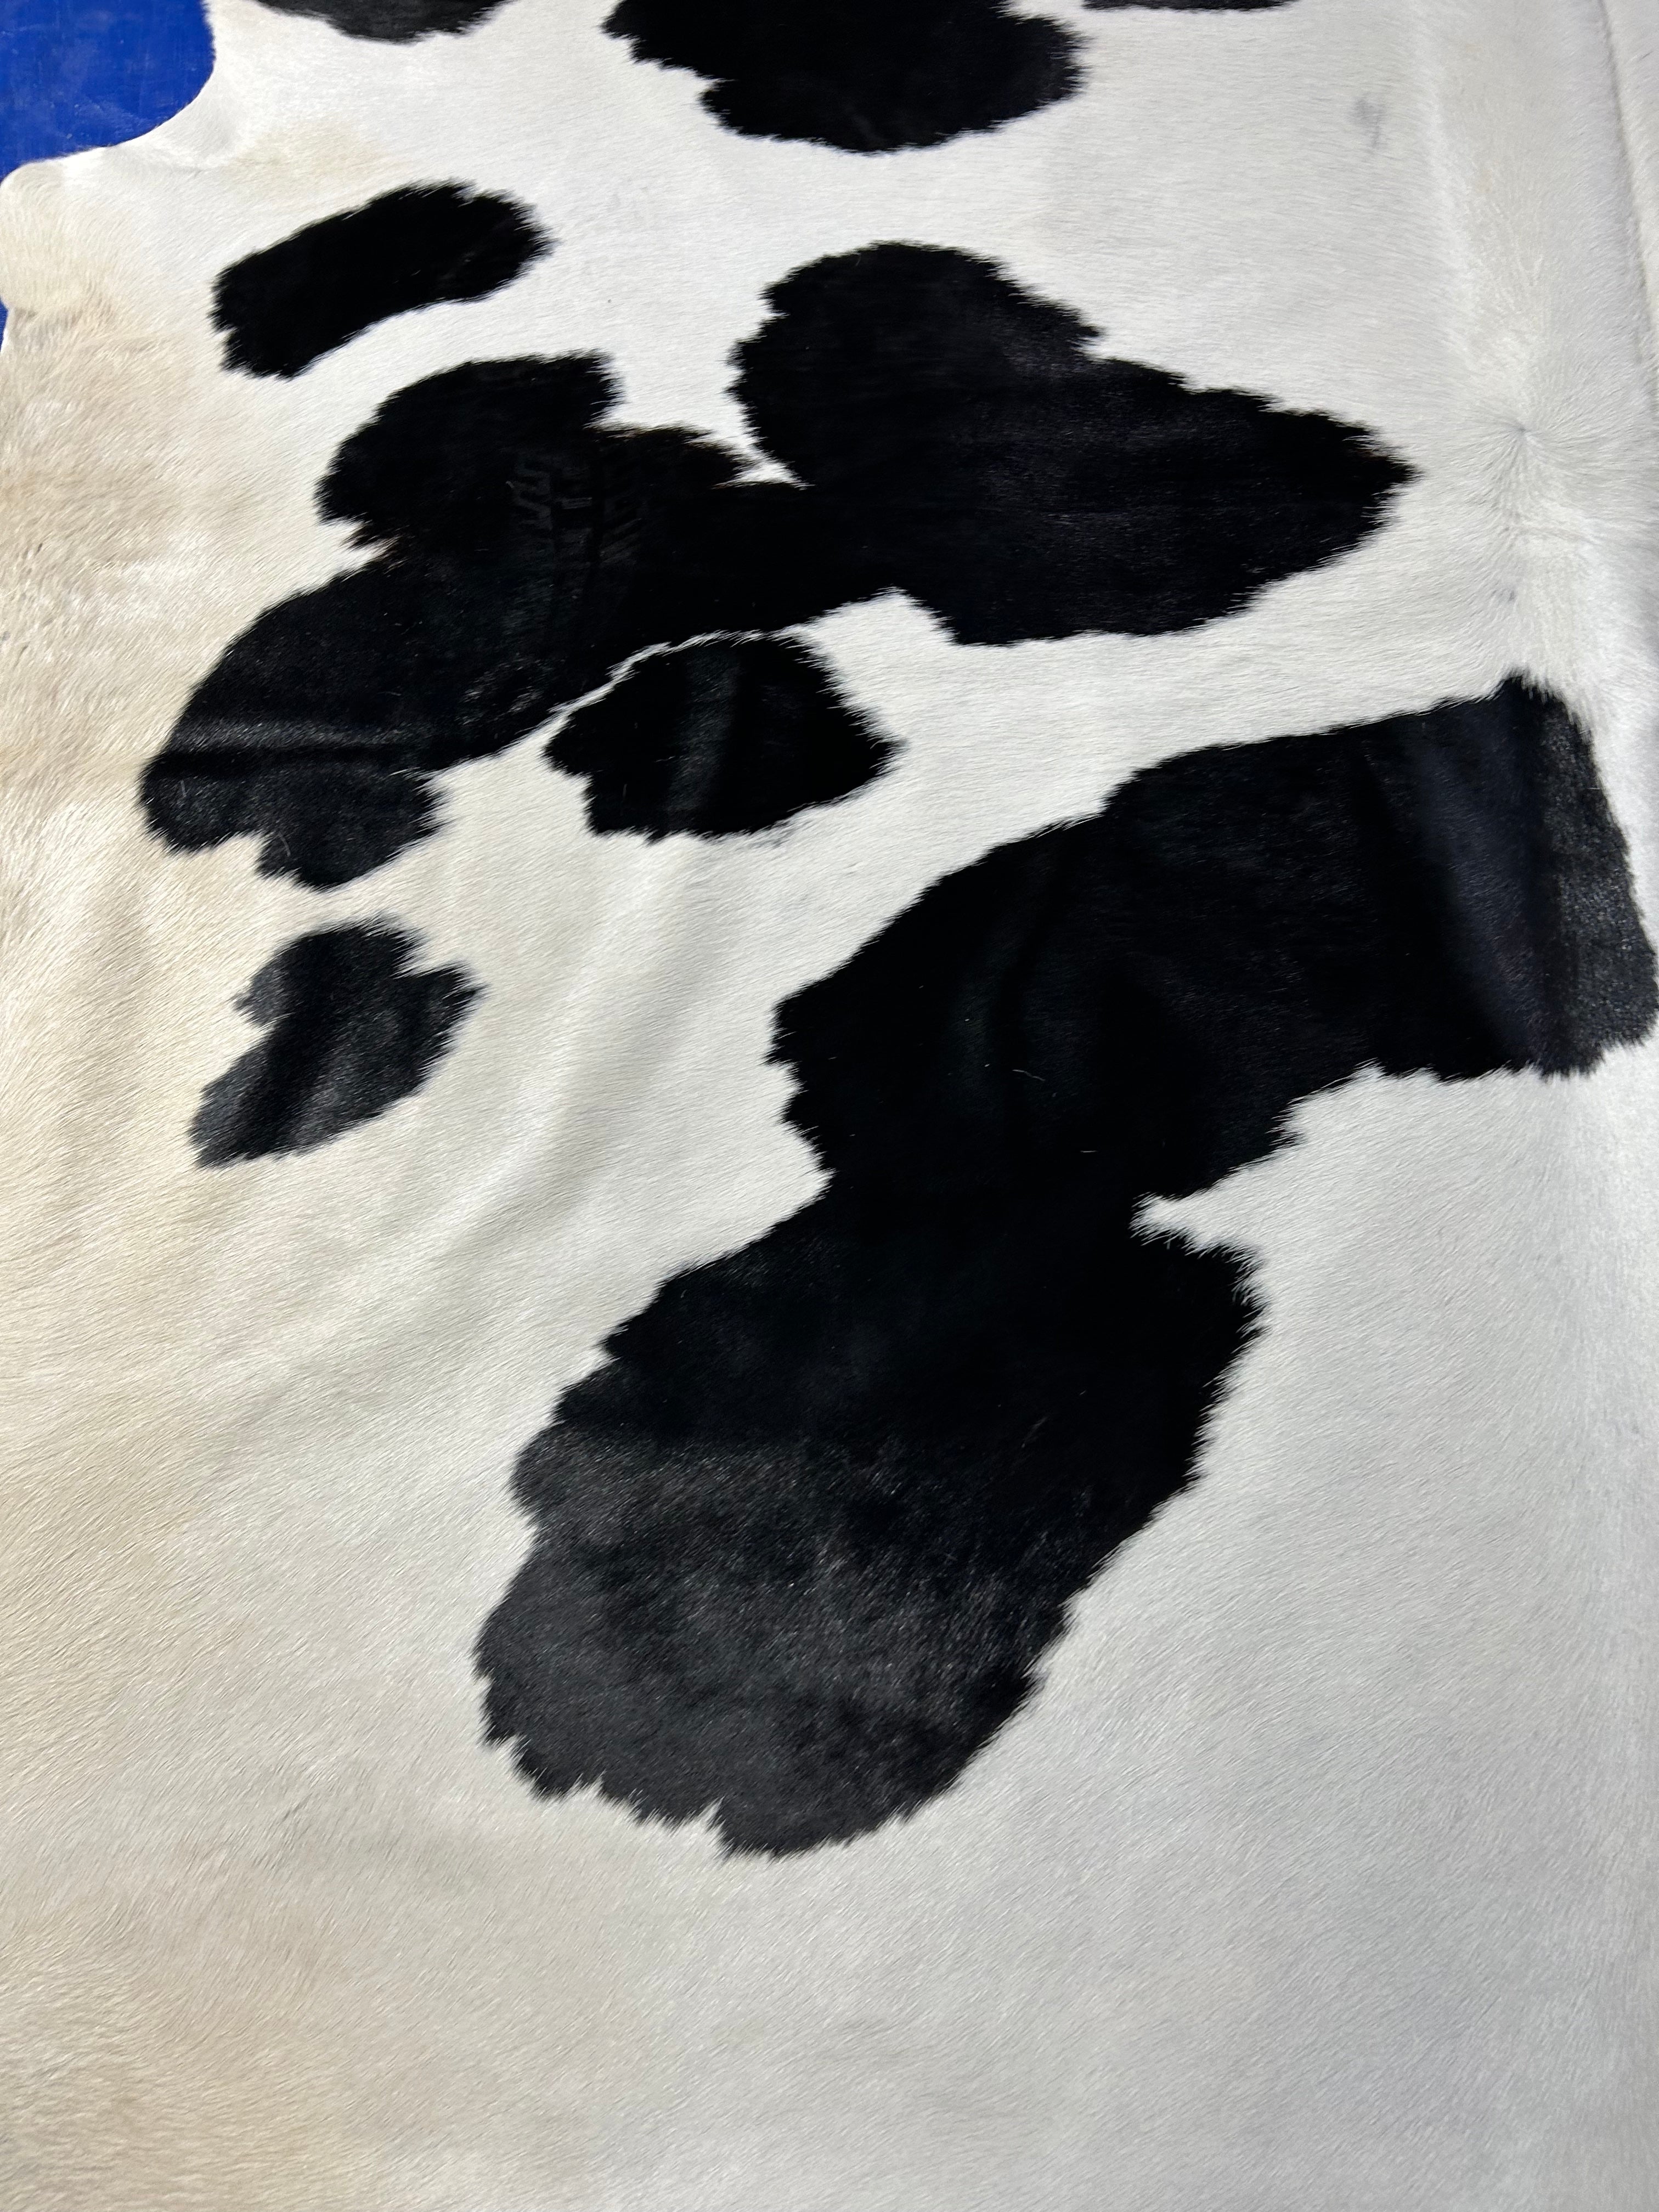 Huge Black & White Holstein Cowhide Rug Size: 8.7x7.5 feet D-070